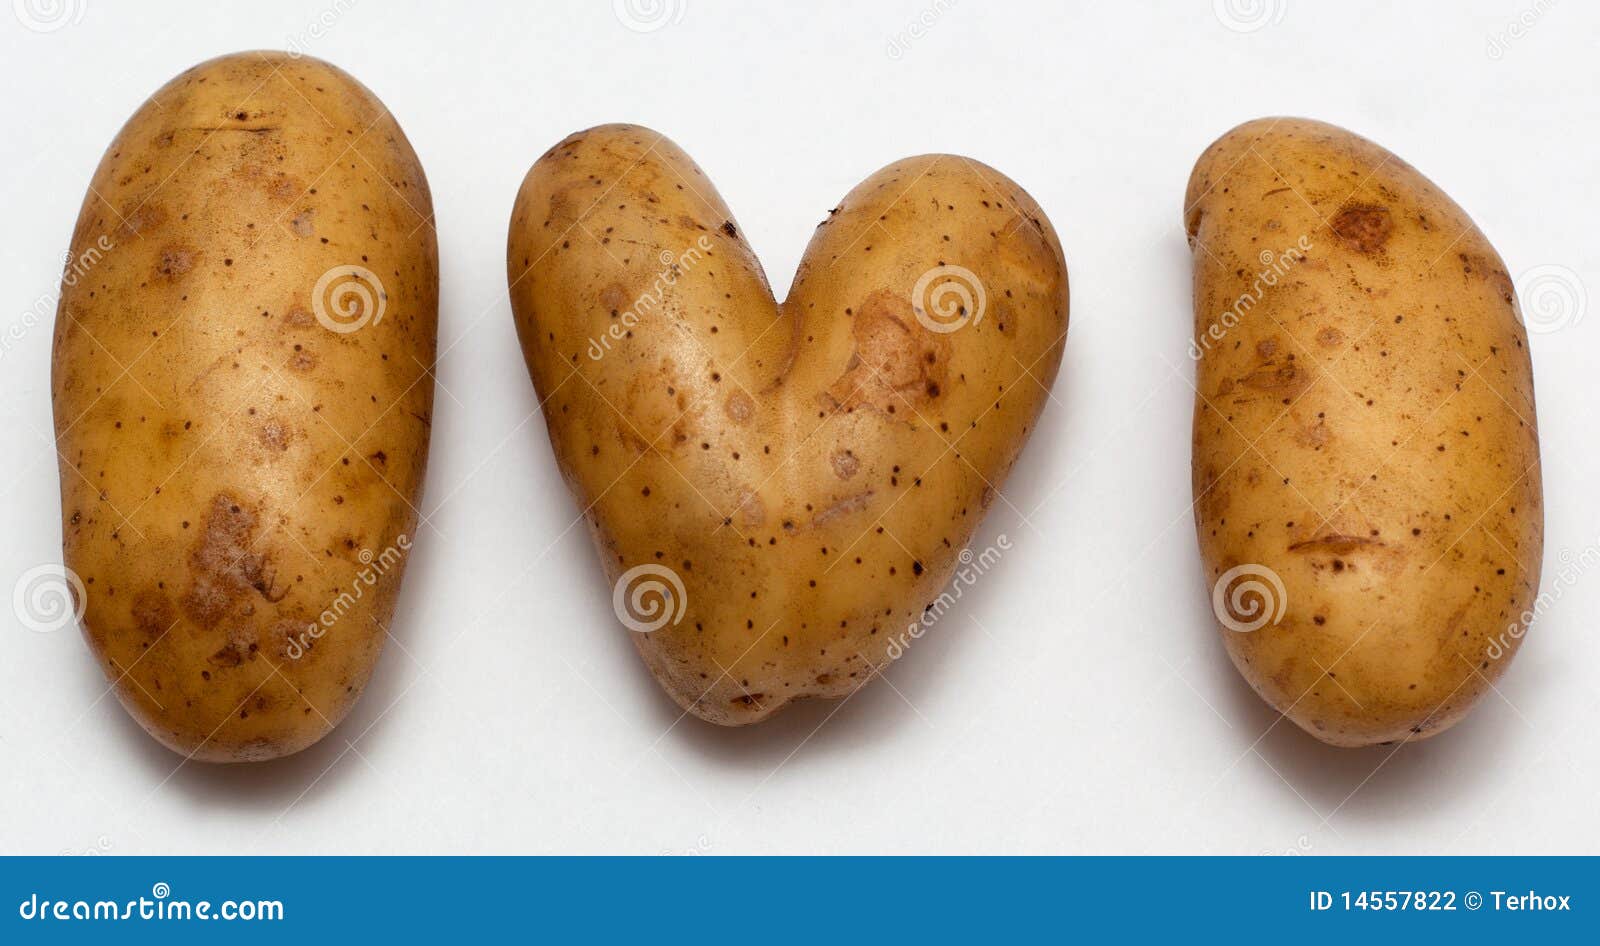 Heart shaped potatoe stock photo. Image of like, food - 14557822